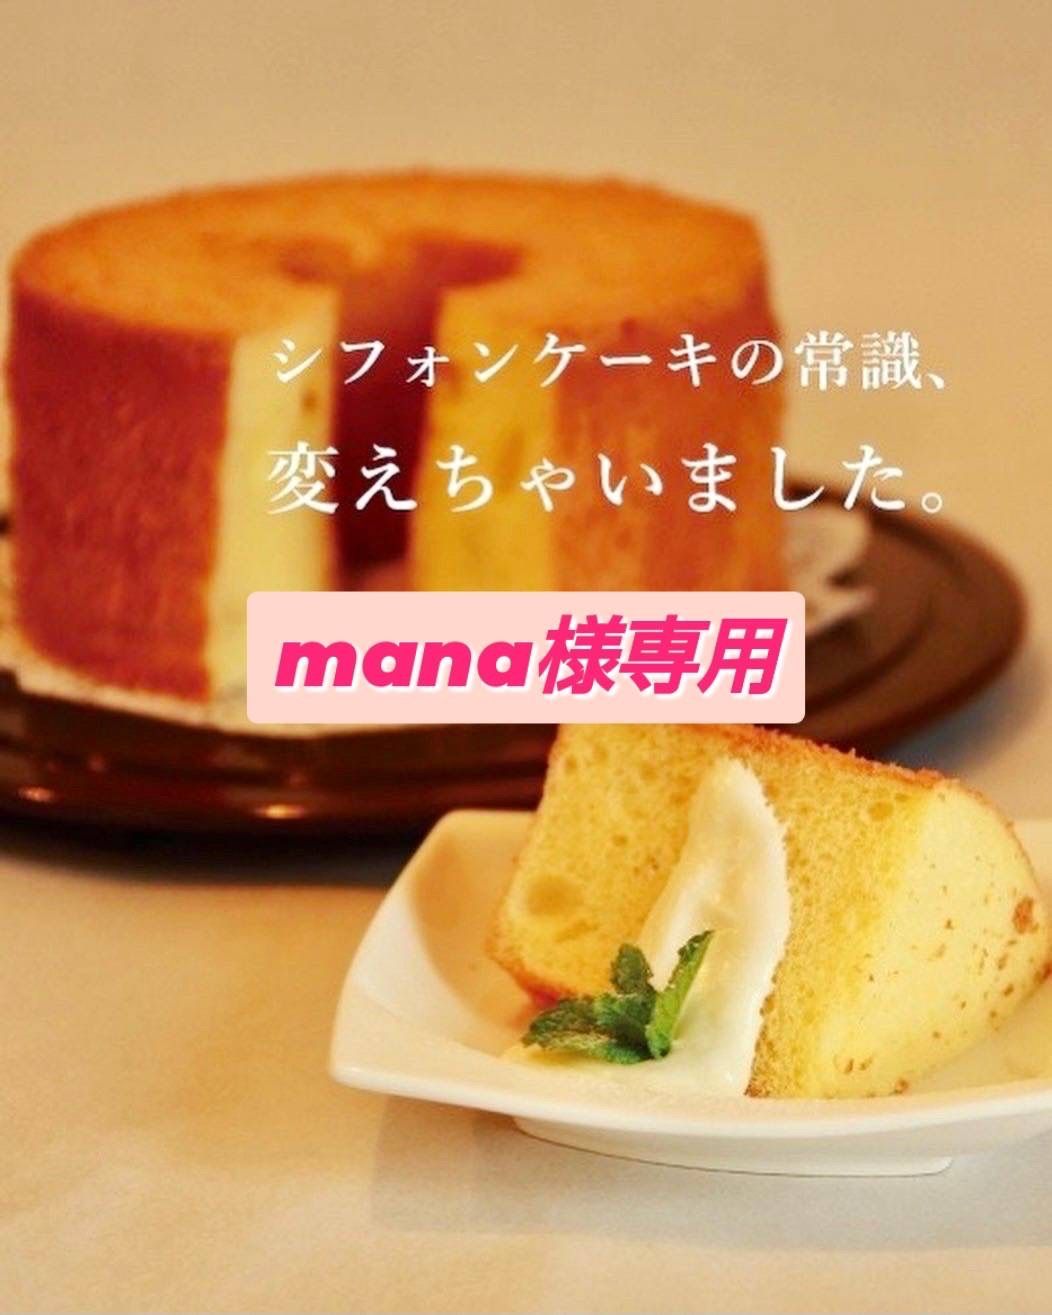 mana様専用〜綿雪〜カットシフォンケーキ10個セット - メルカリShops